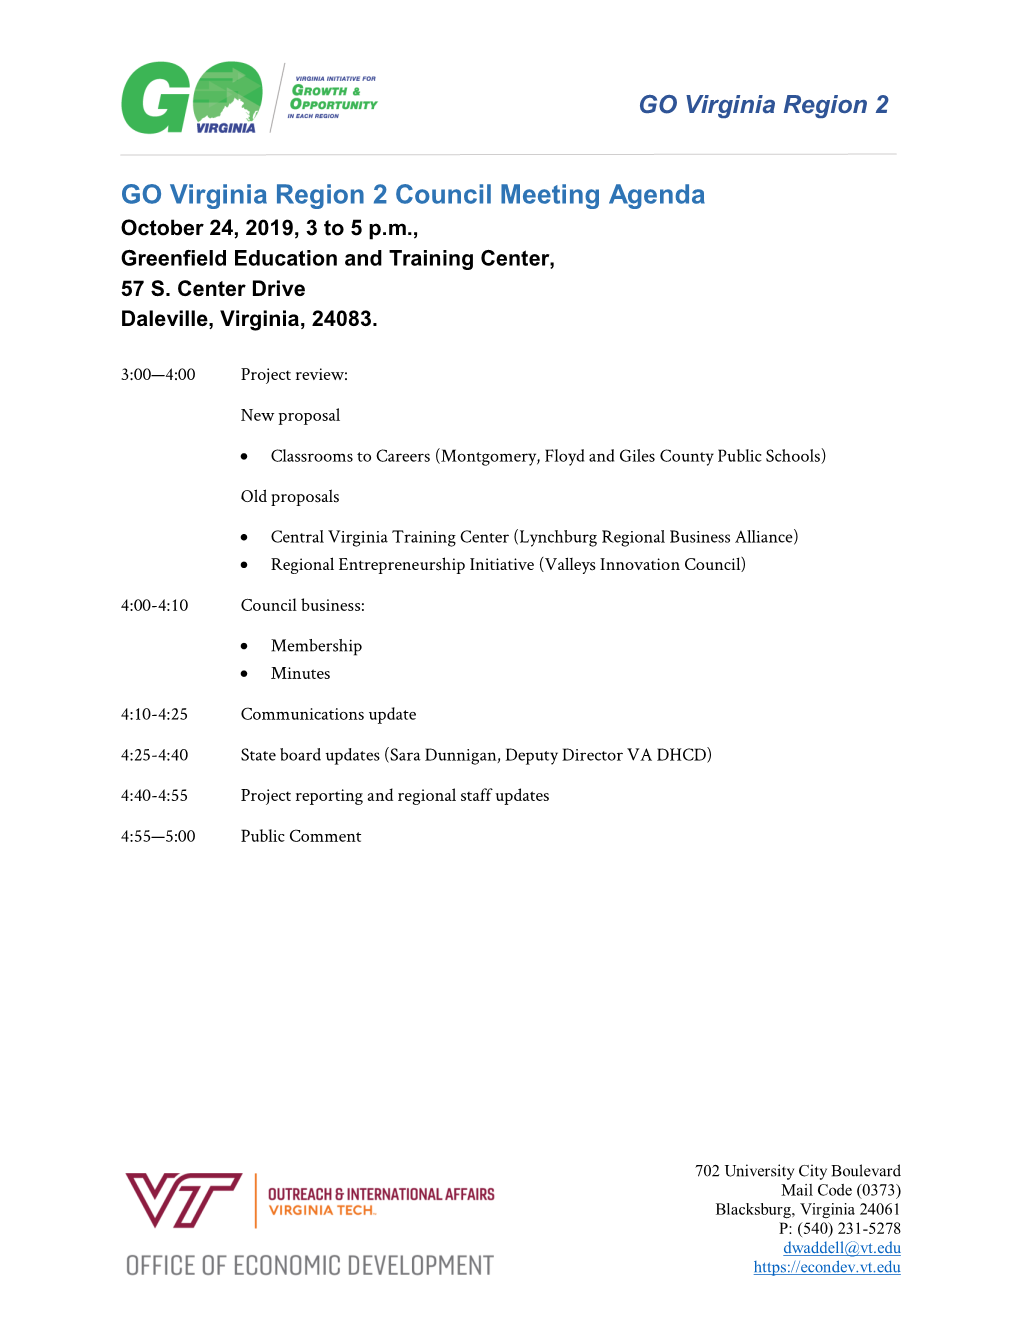 October 24, 2019 GO Virginia Region 2 Council Meeting Information Packet